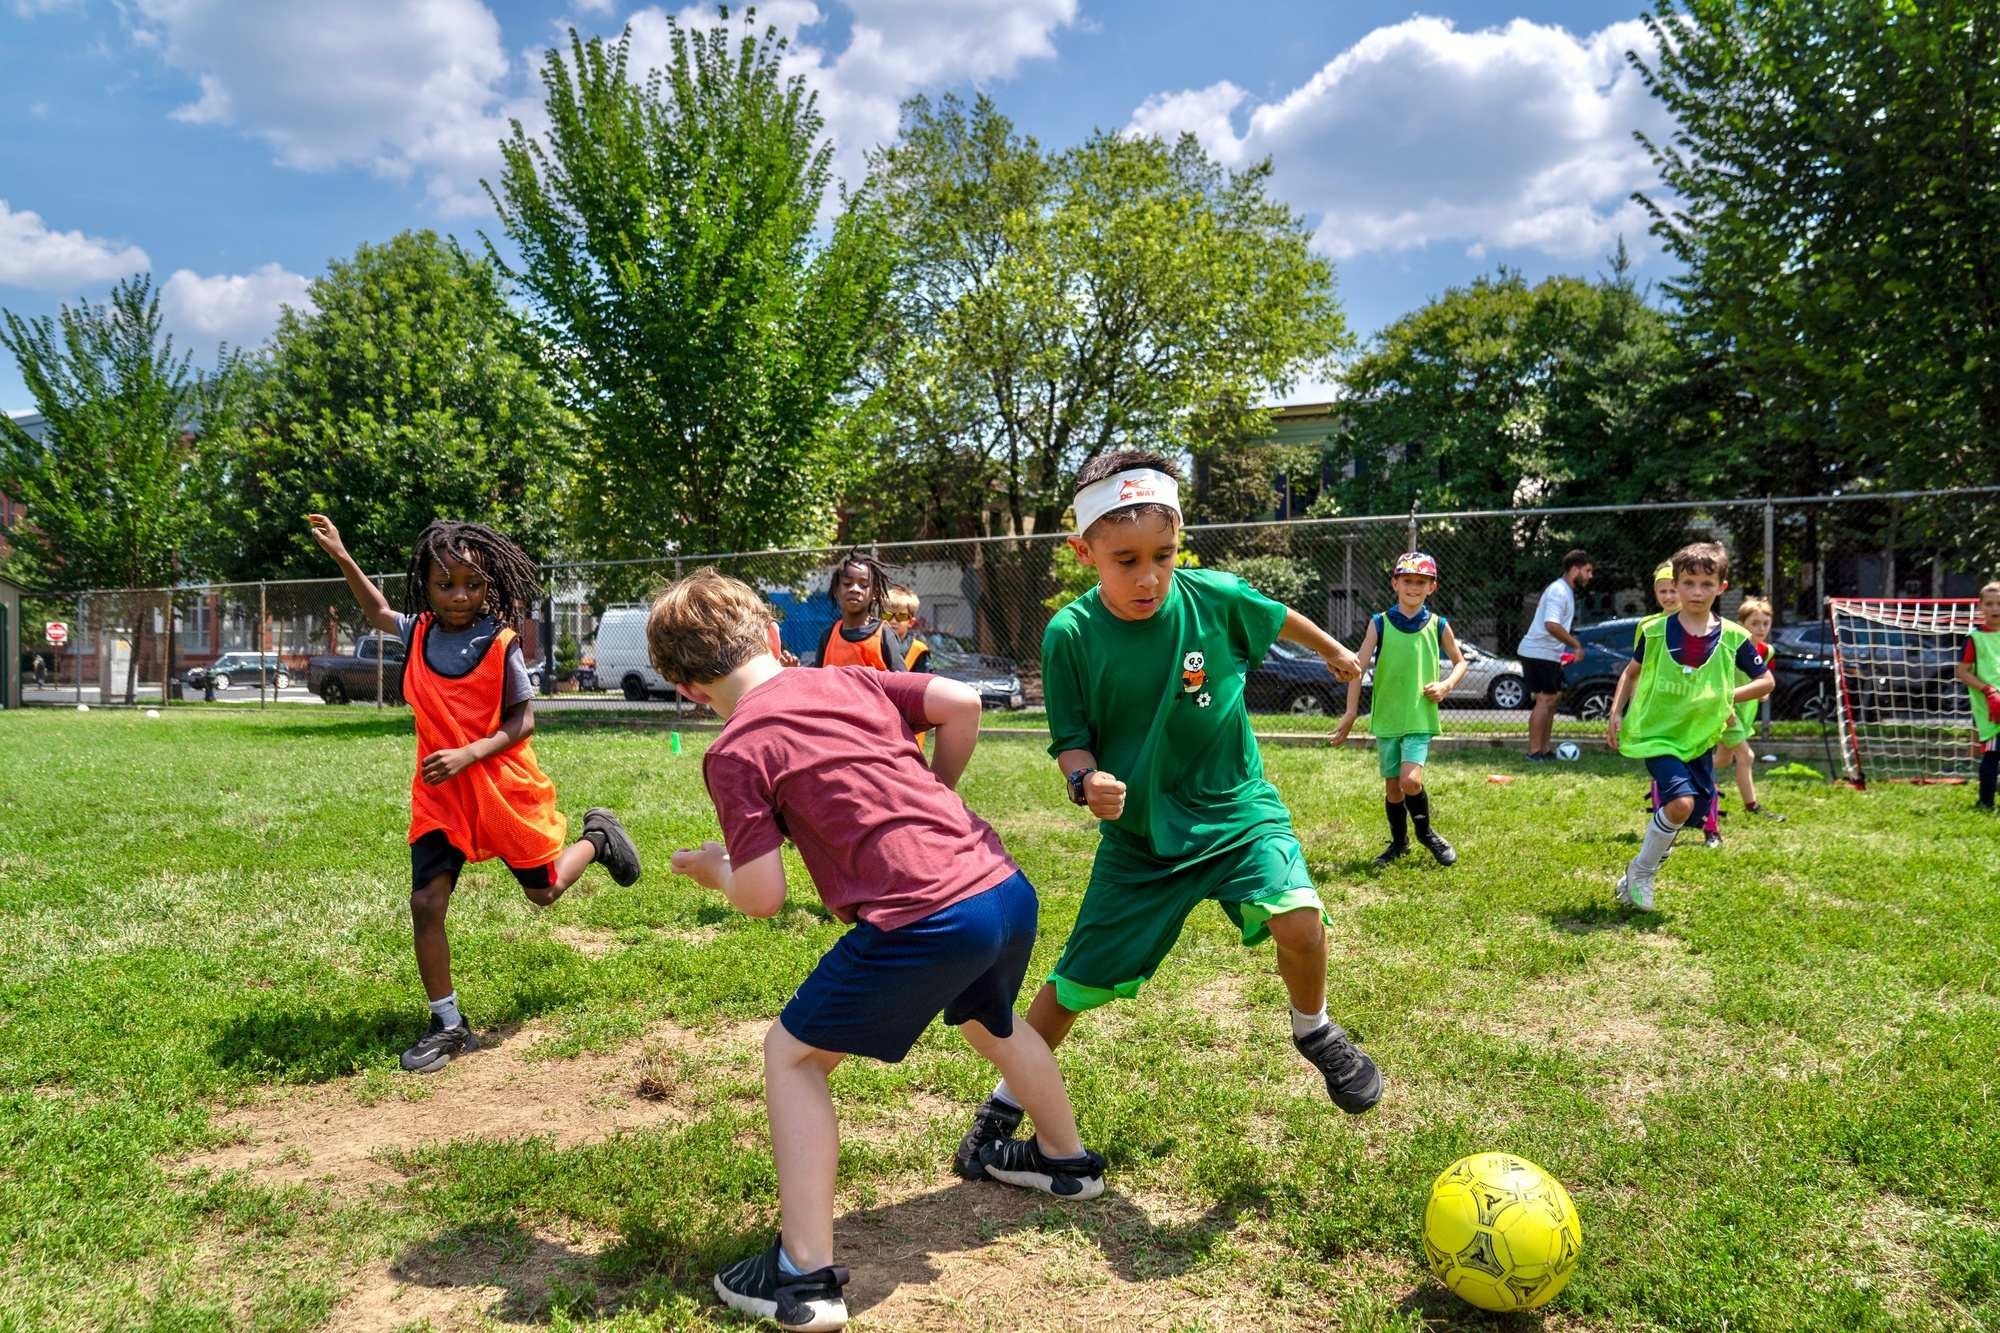 Dc-way-soccer-club-for-kids-in-washington-dc-summer-camp-at-tyler-elementary-school- 0066.jpg